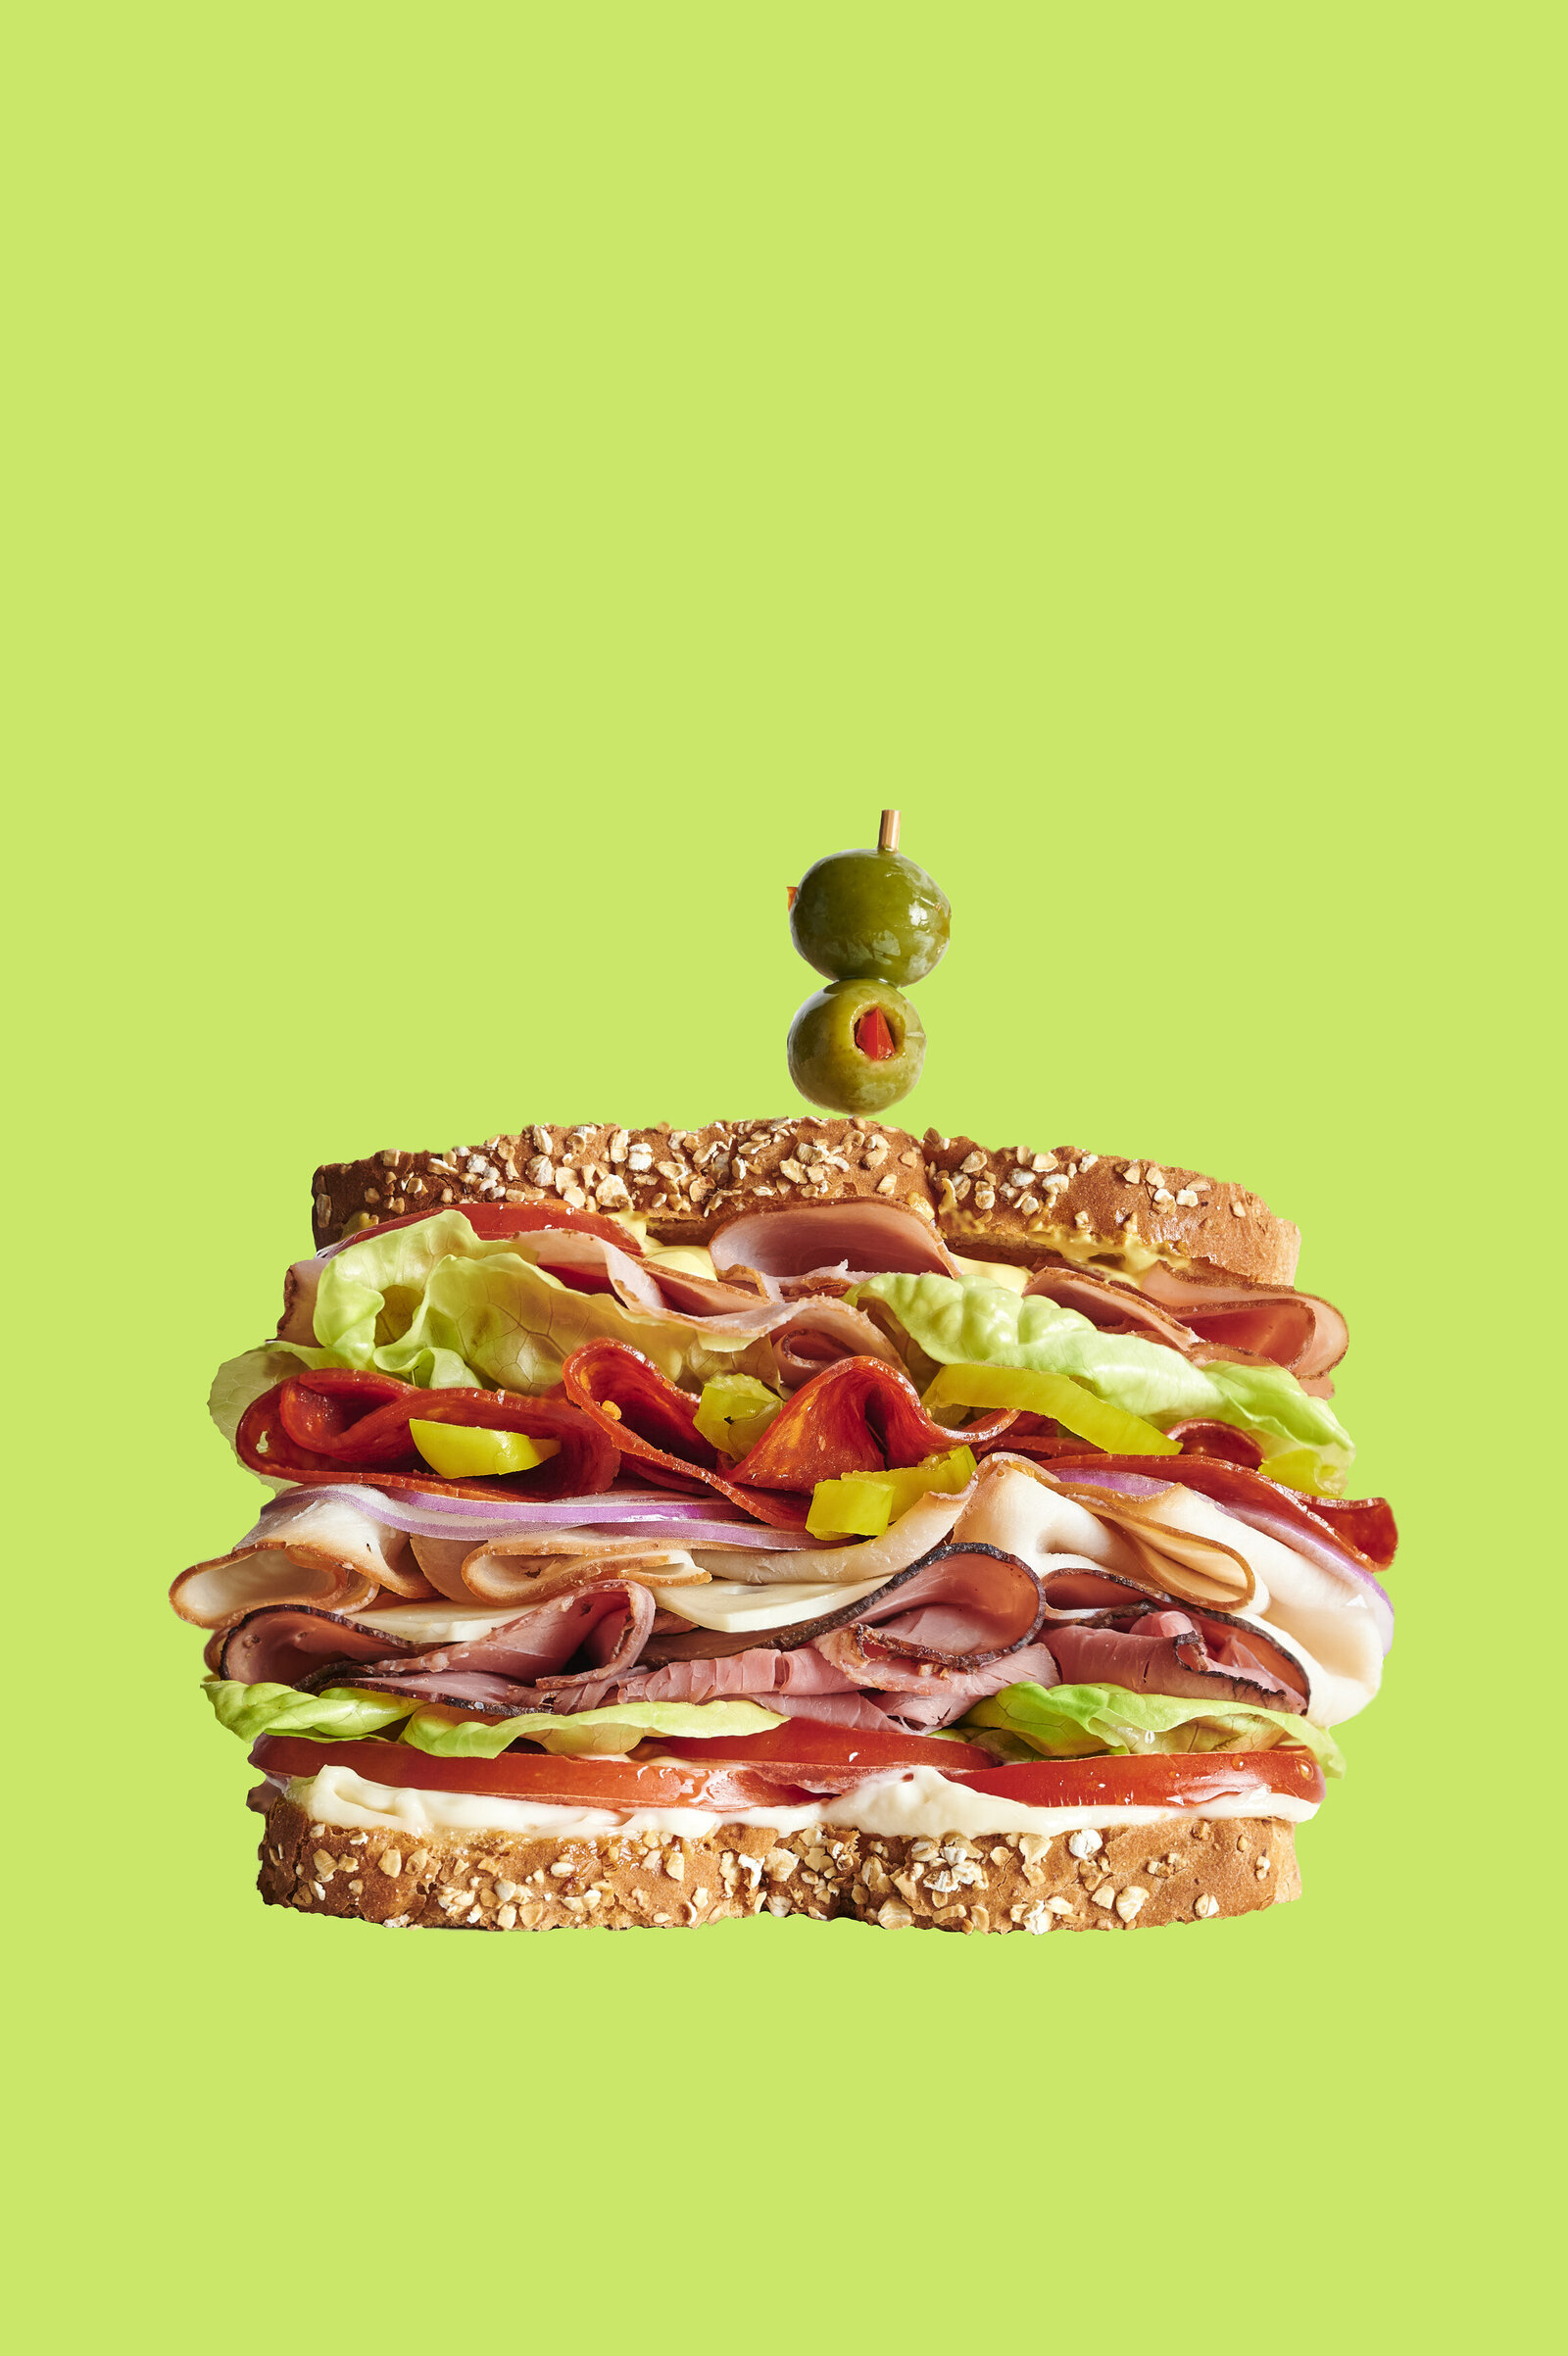 Sandwich on Green Vertical